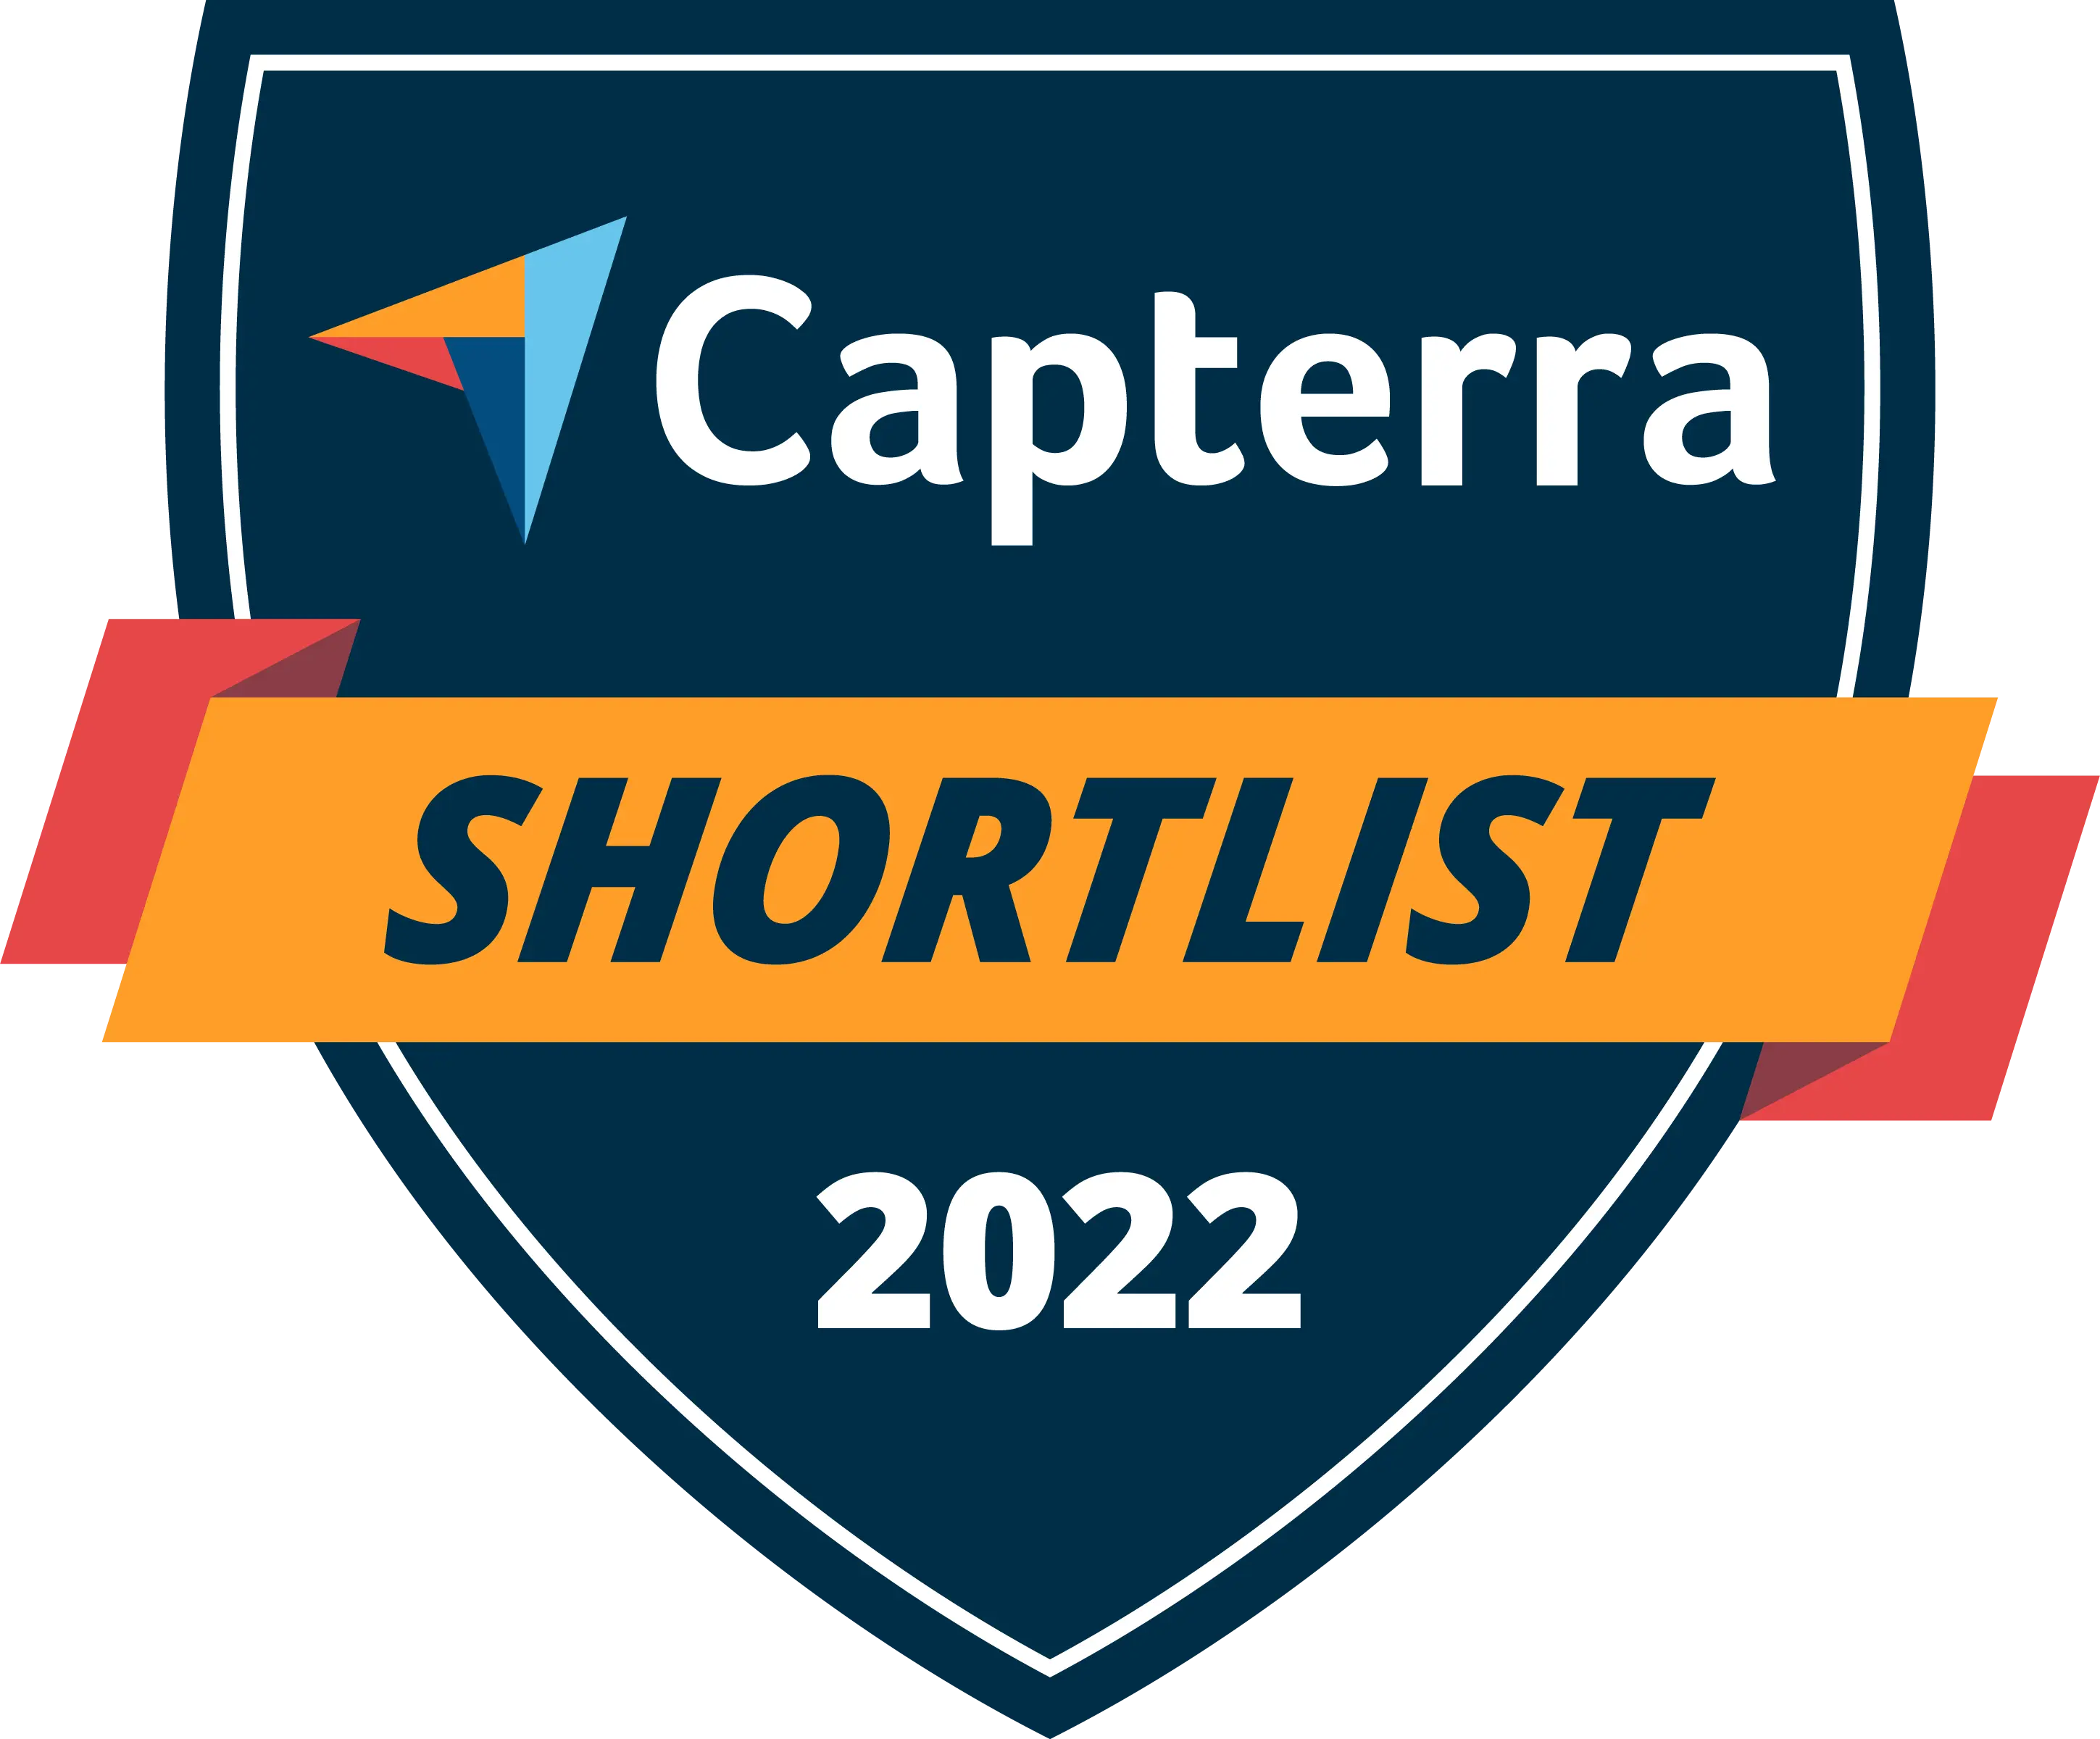 Capterra - Shortlist - 2022.WebP